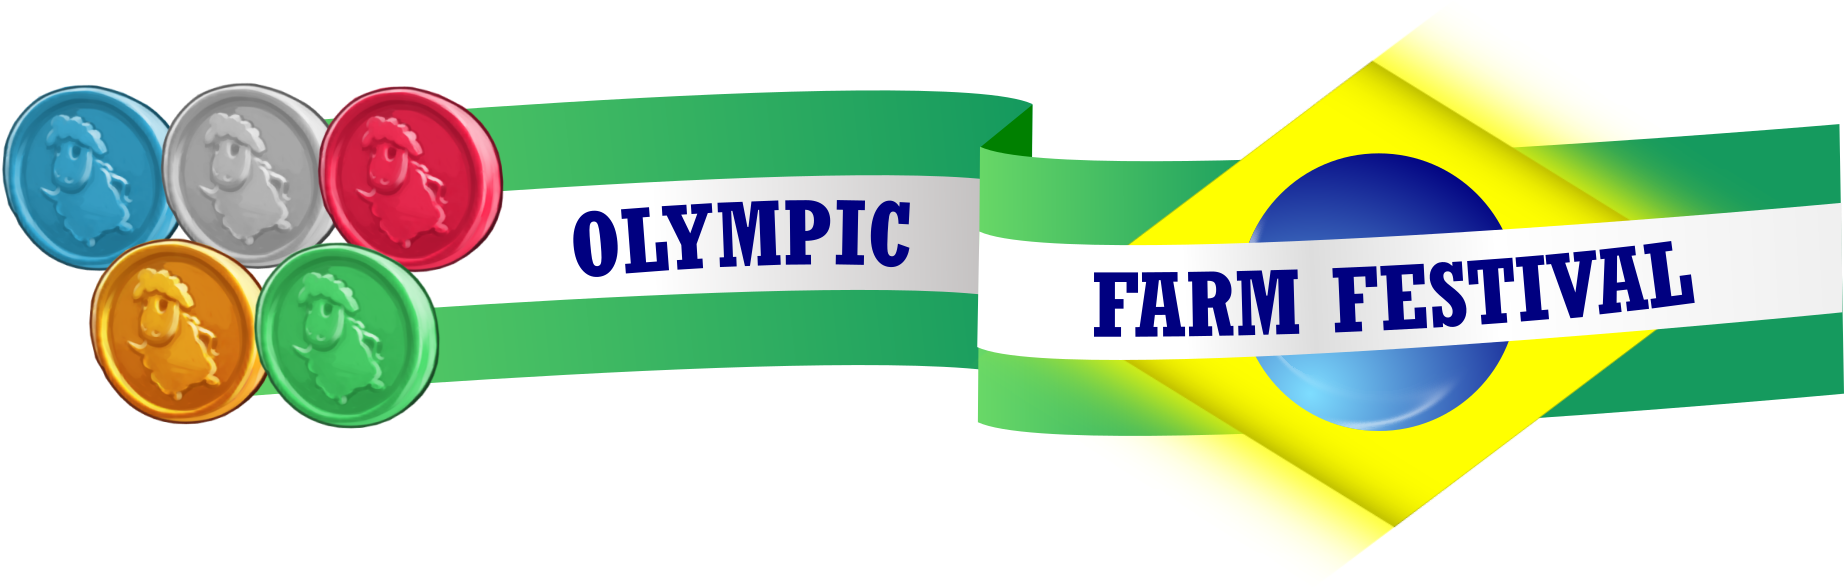 Olympic Farm Festival Of Family Barn - True Grit Movie Poster (1863x634)